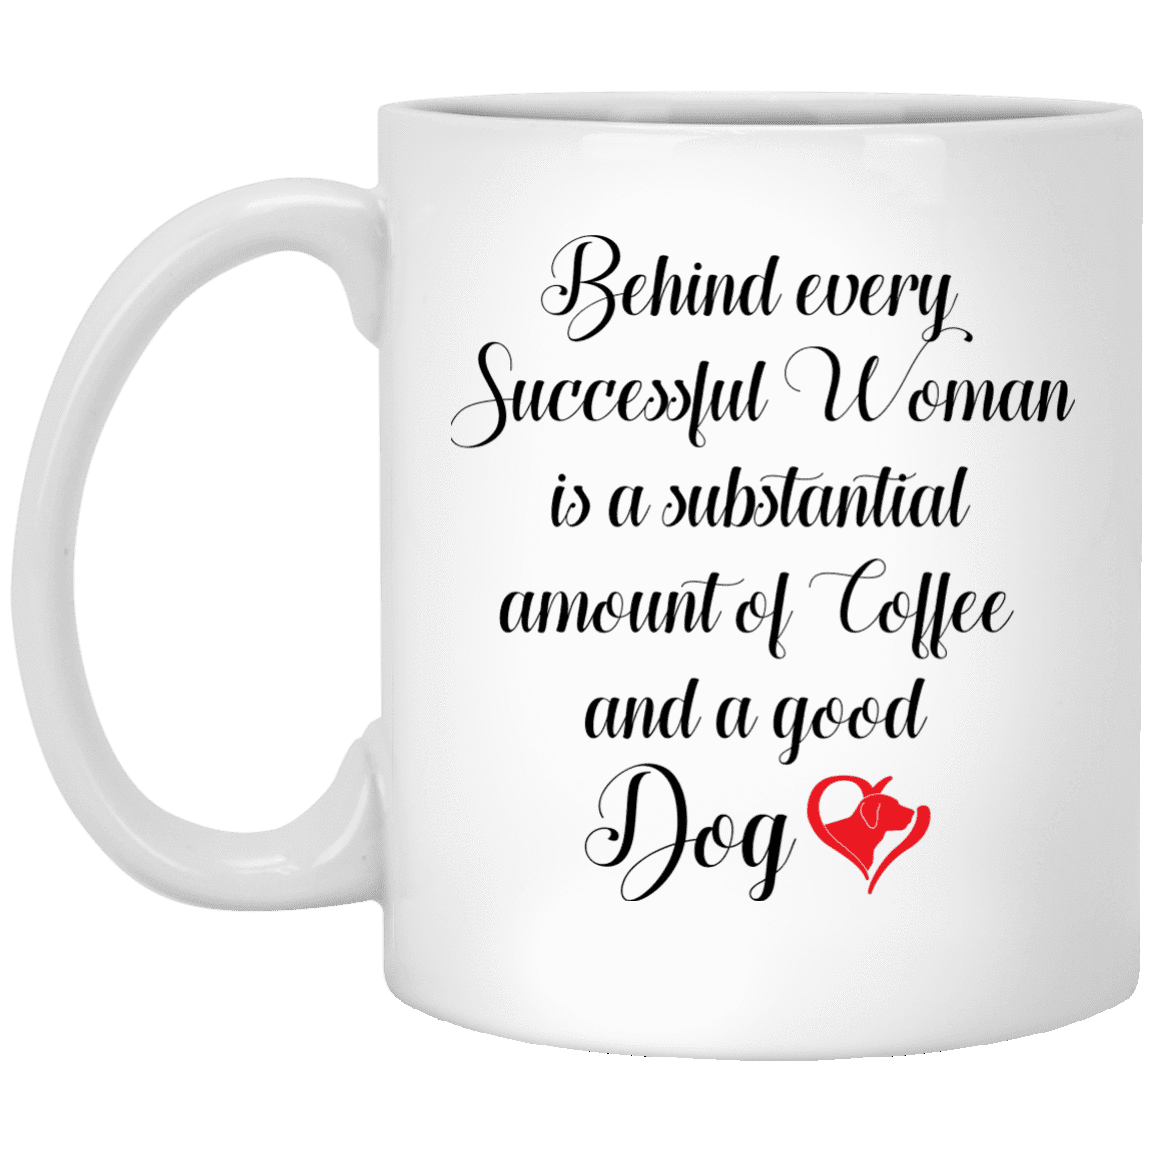 Coffee and a Good Dog - Mugs.